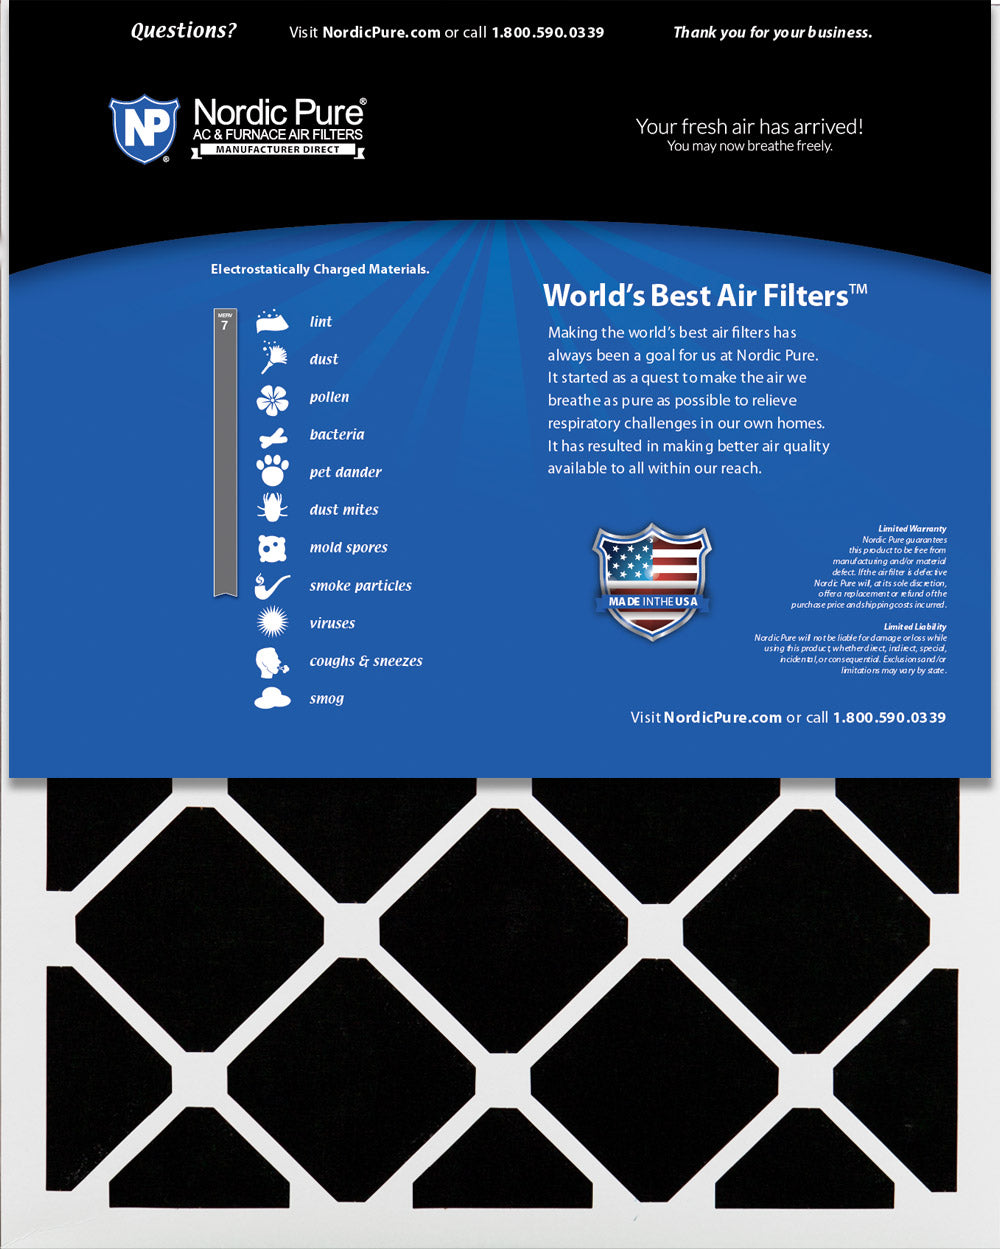 14x36x1 MERV 7 Plus Carbon AC Furnace Filters